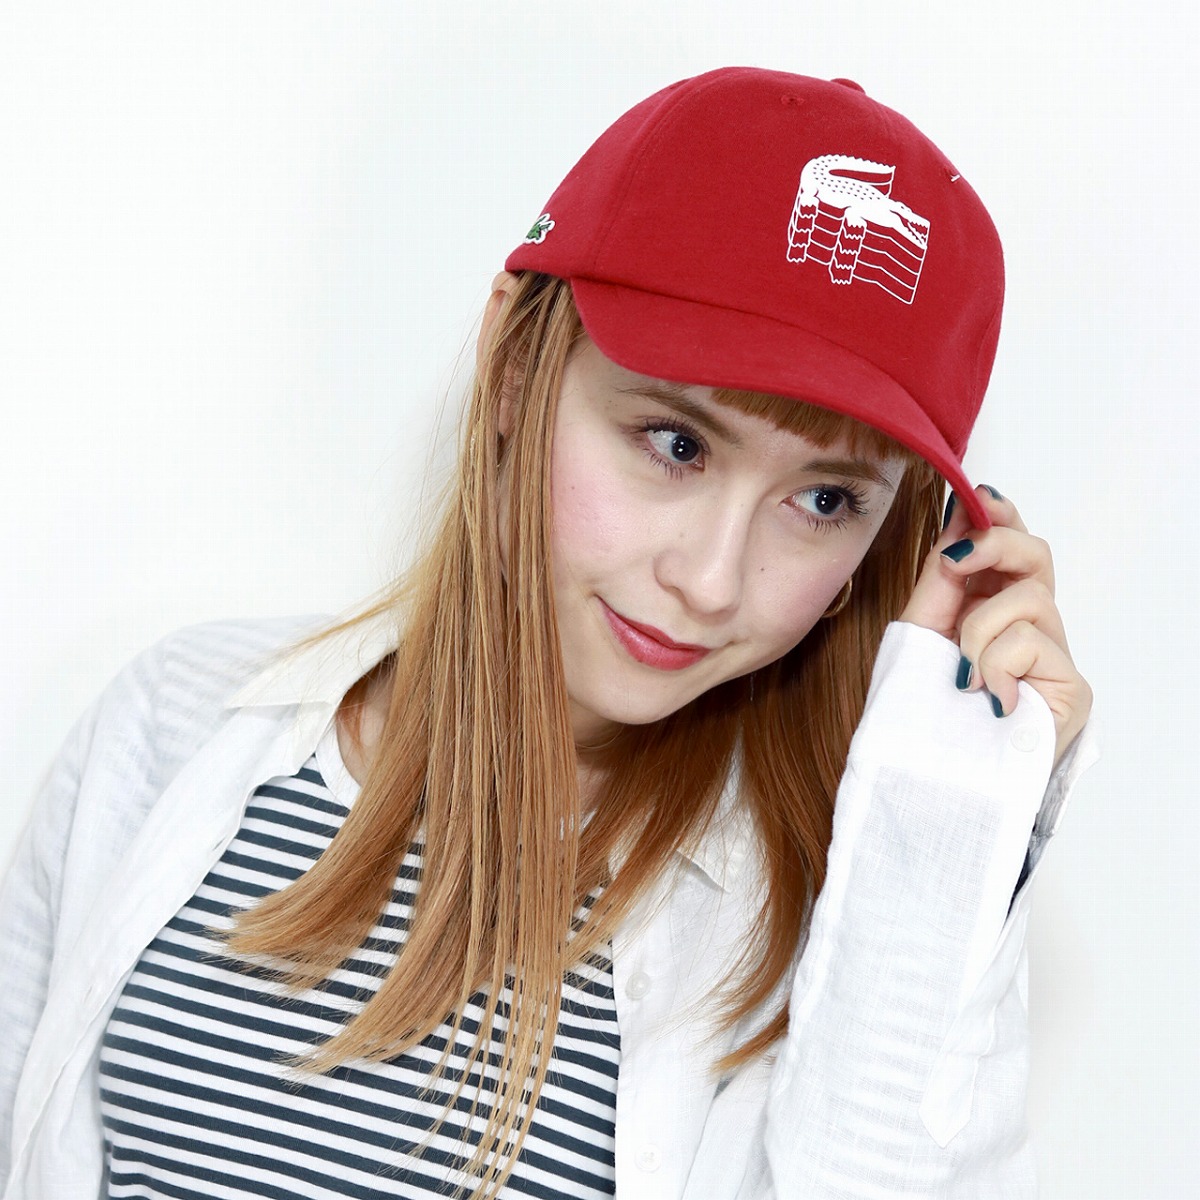 Red cap блоггер